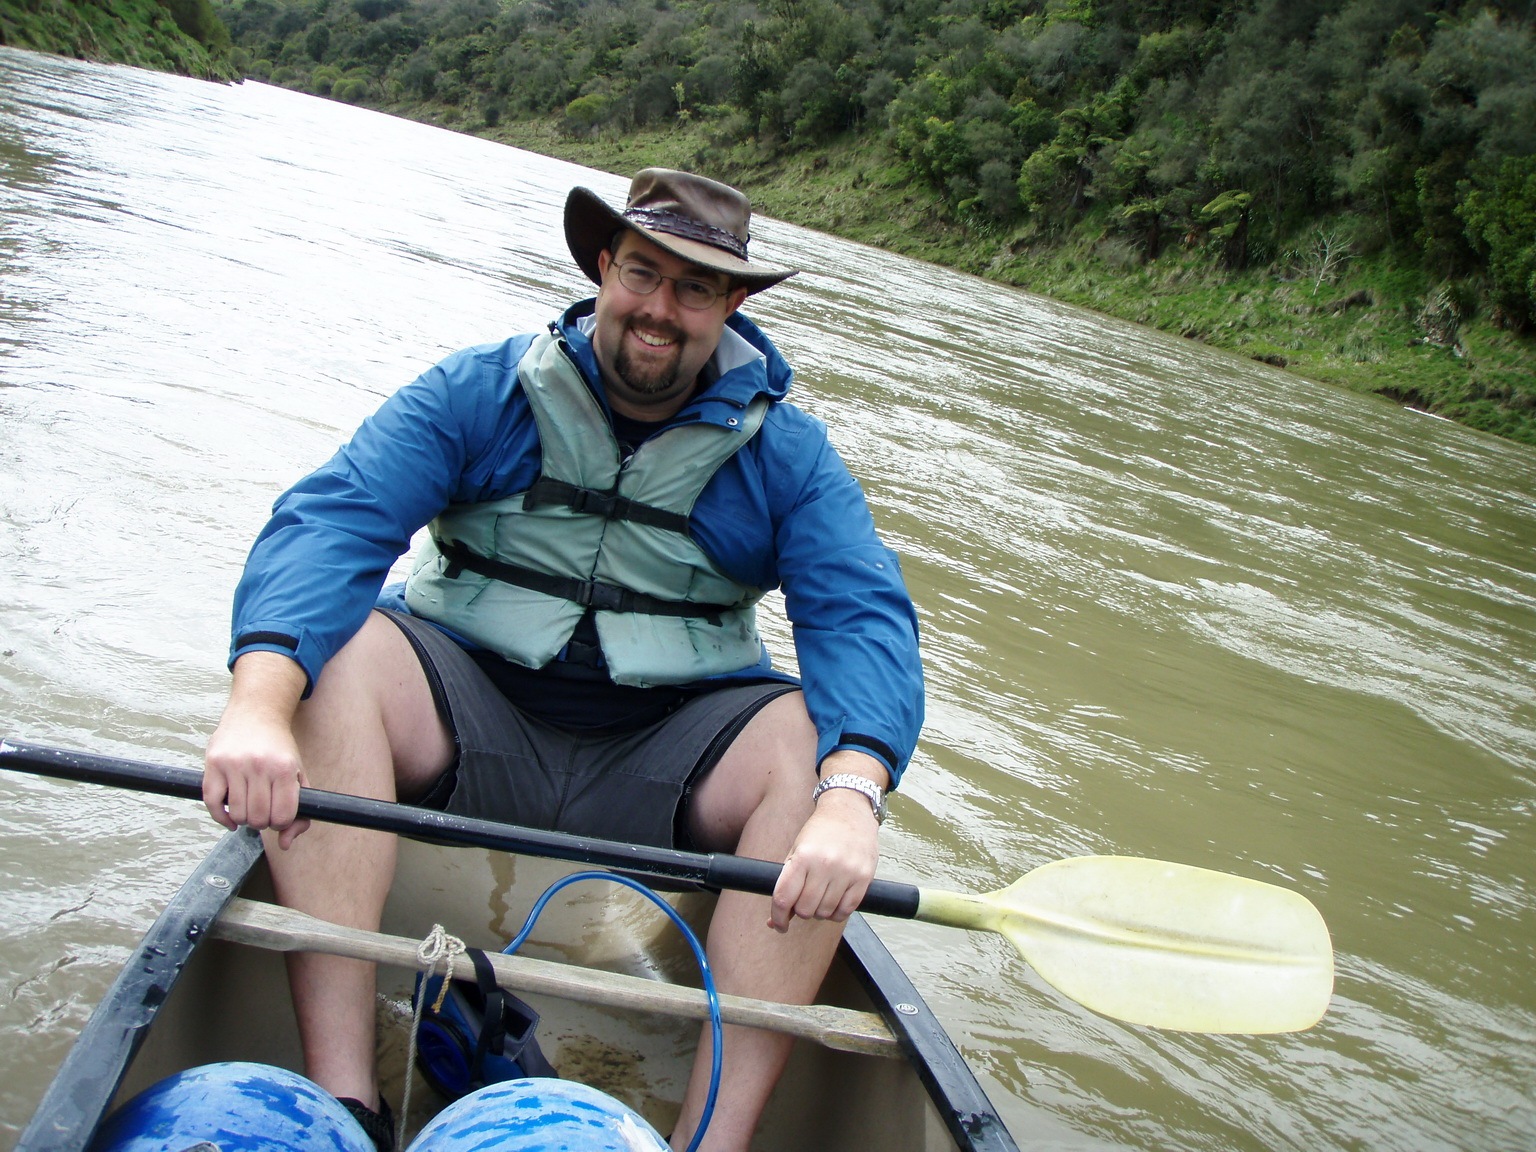 Me in the canoe